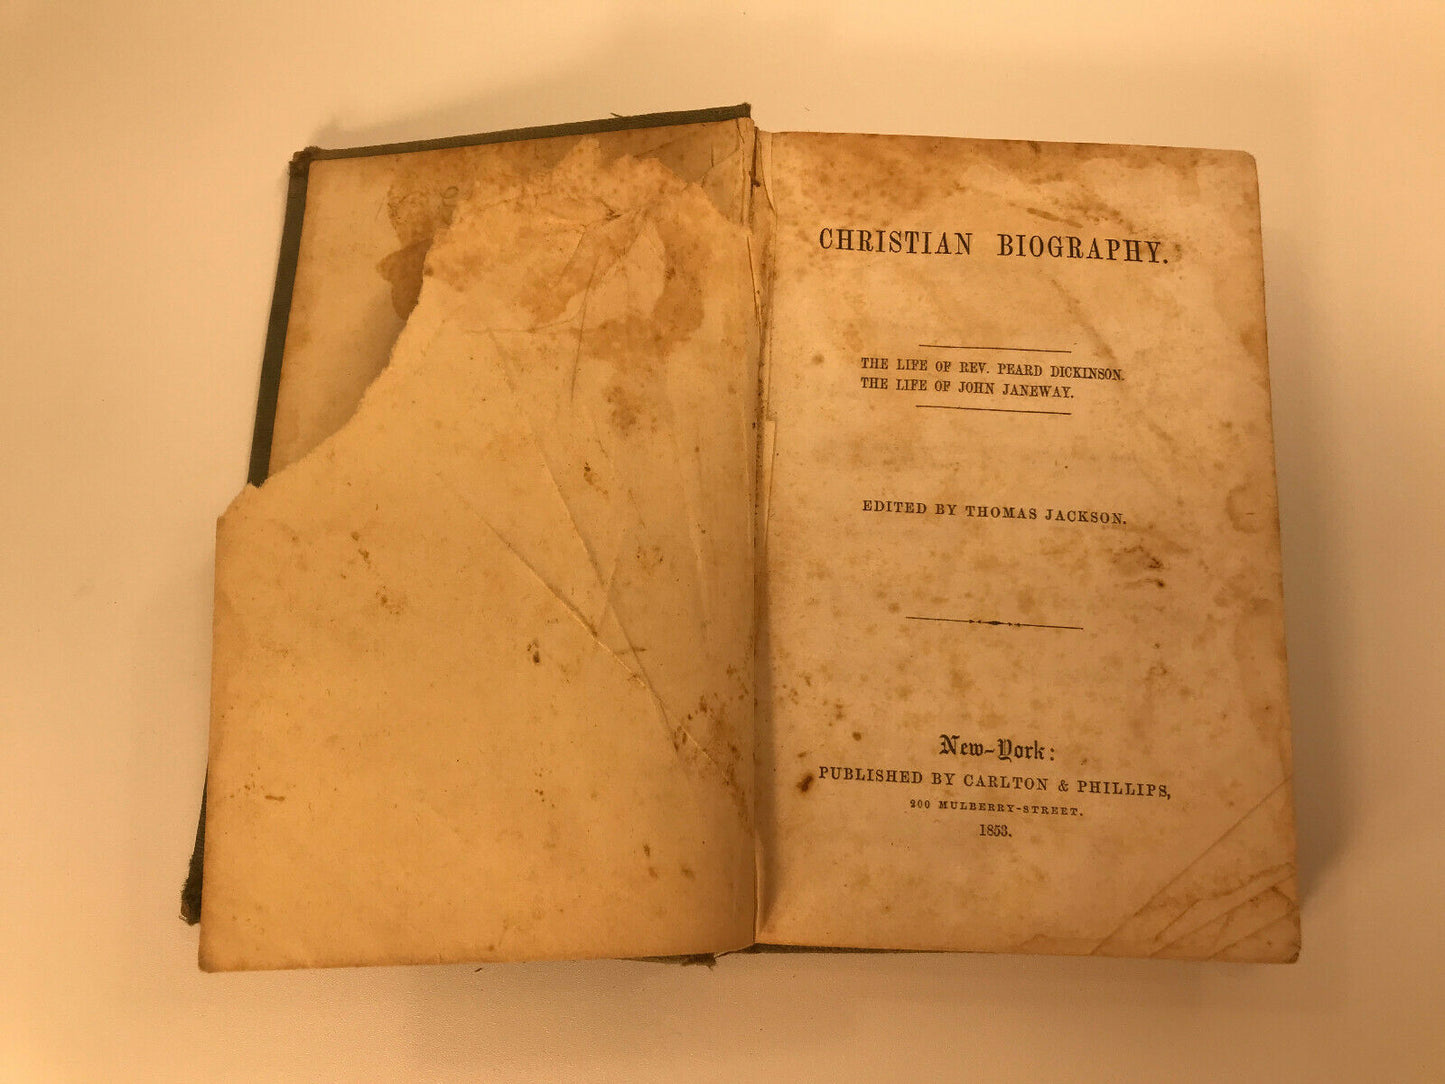 Christian Biography LIfe of Dickson & Janeway edited by Thomas Jackson 1853